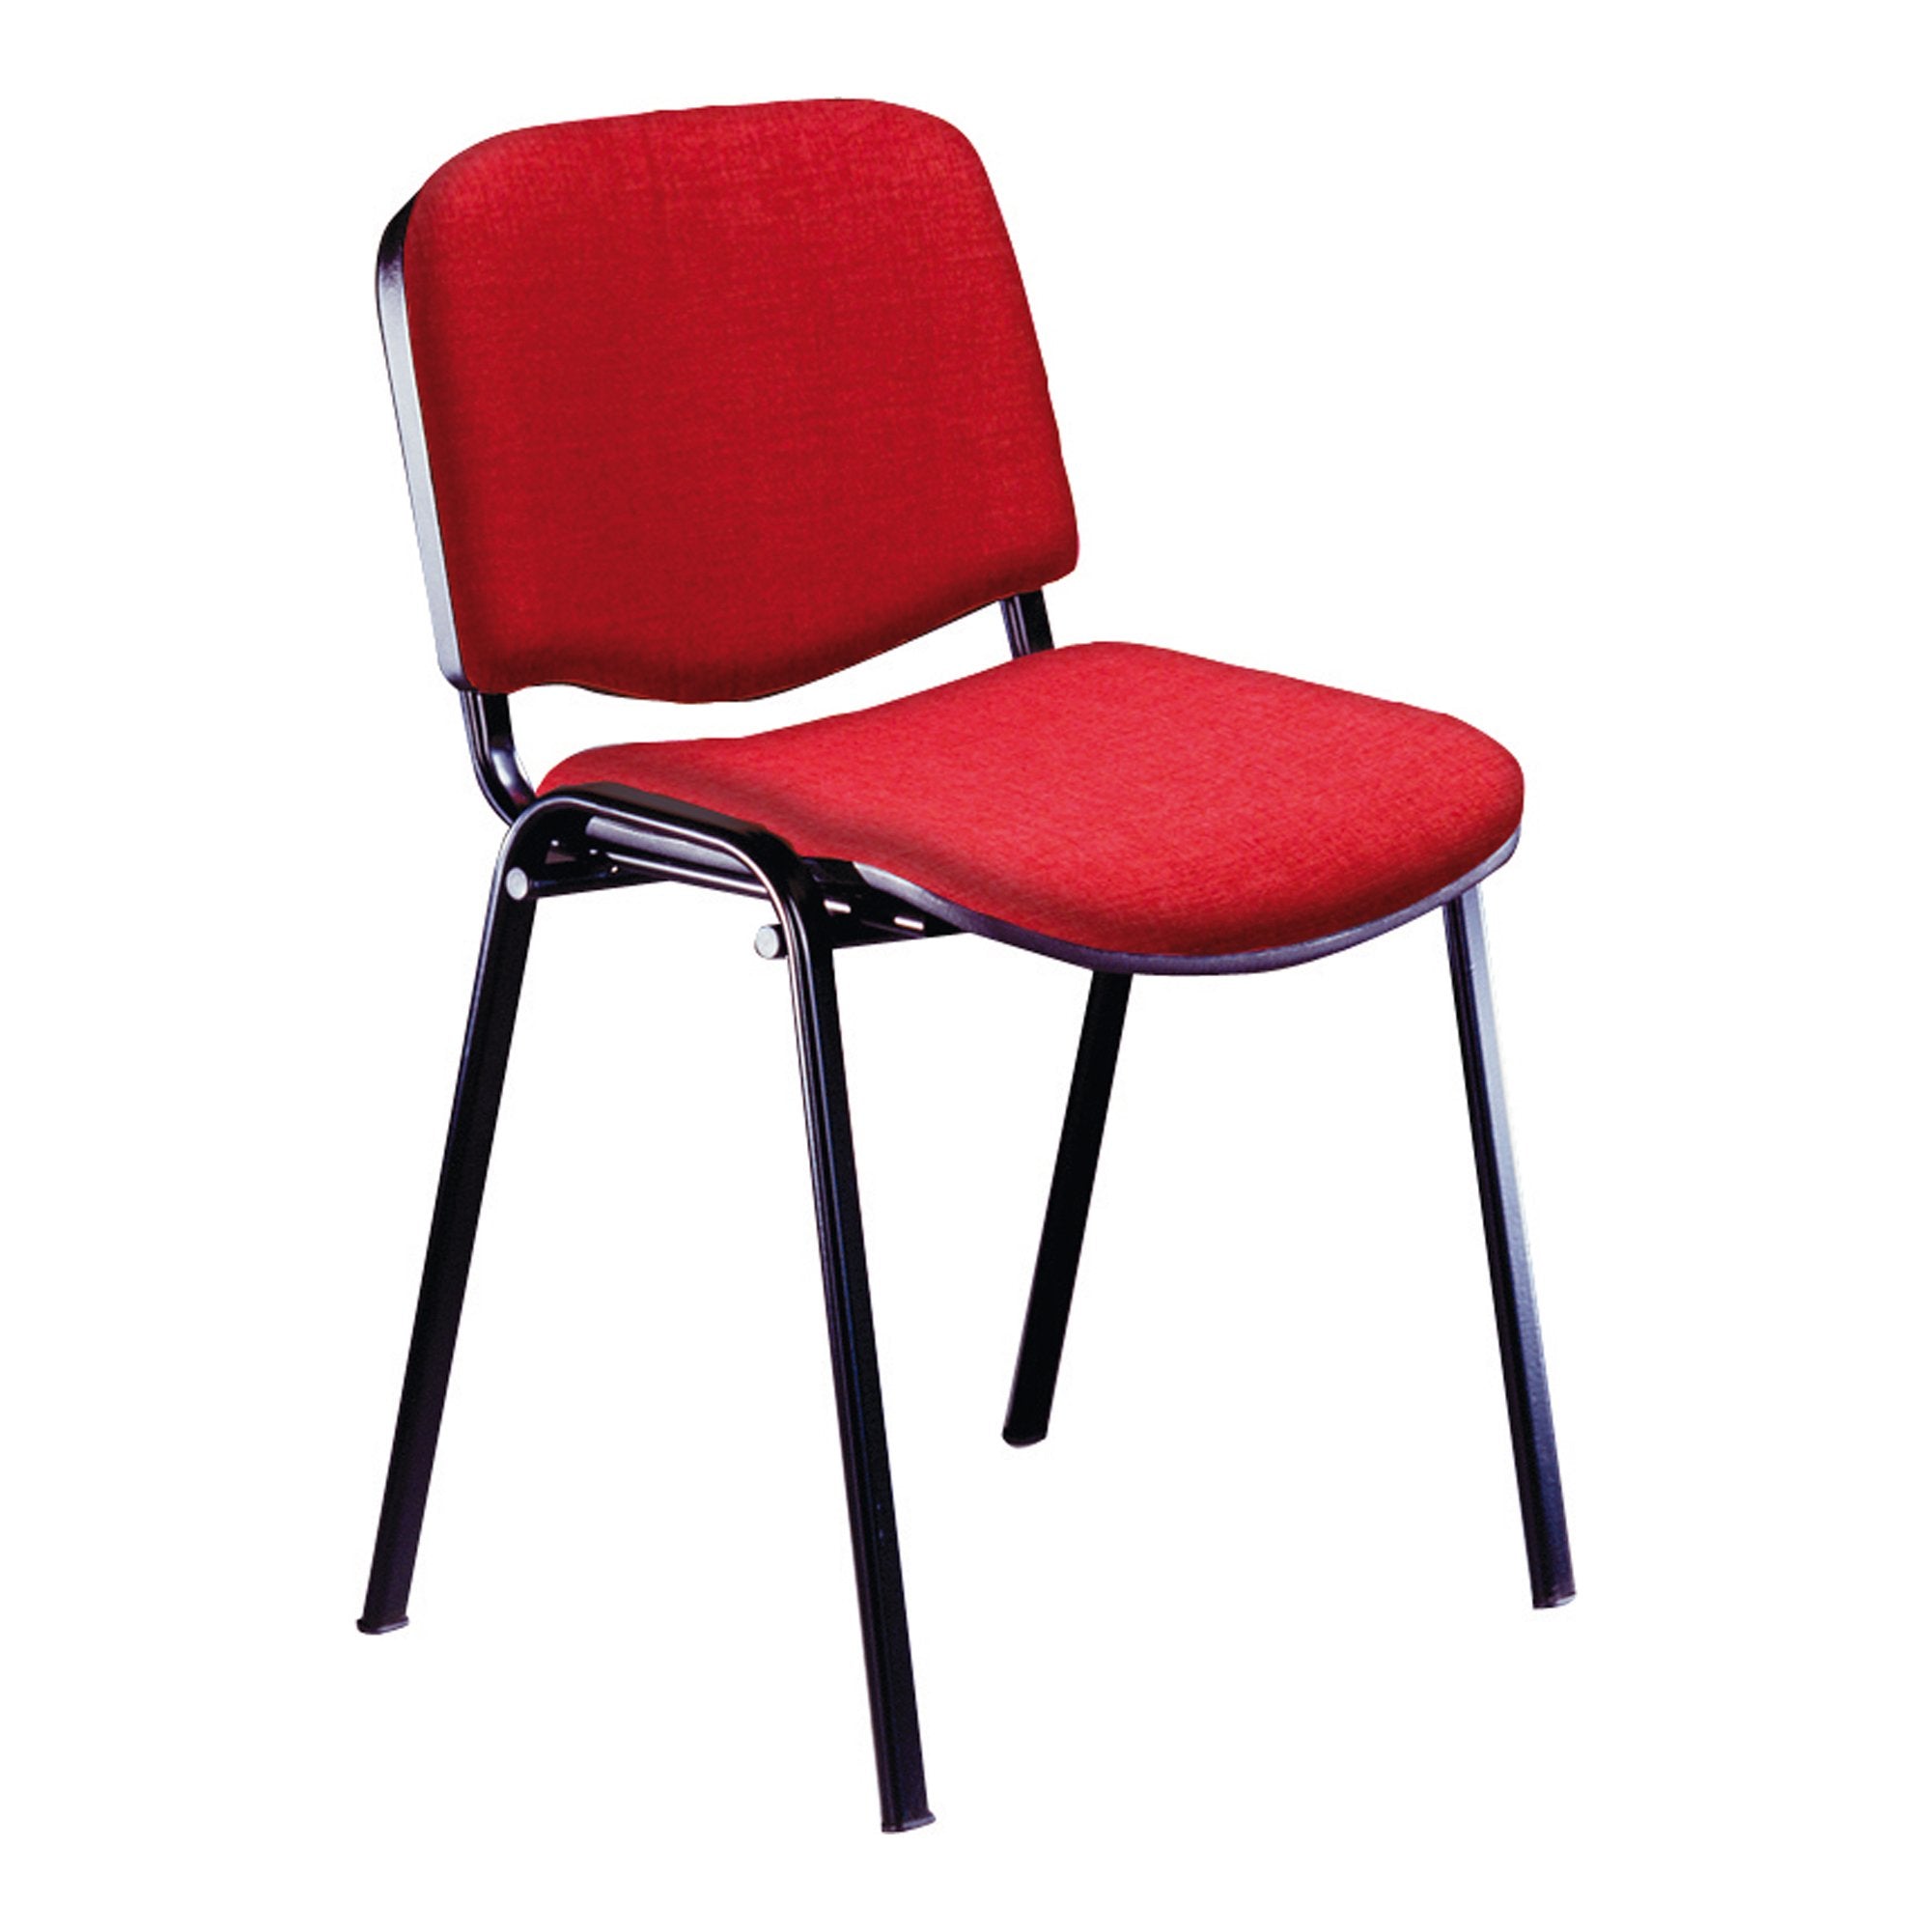 unisit-sedia-attesa-dado-d5s-no-flame-rosso-senza-braccioli